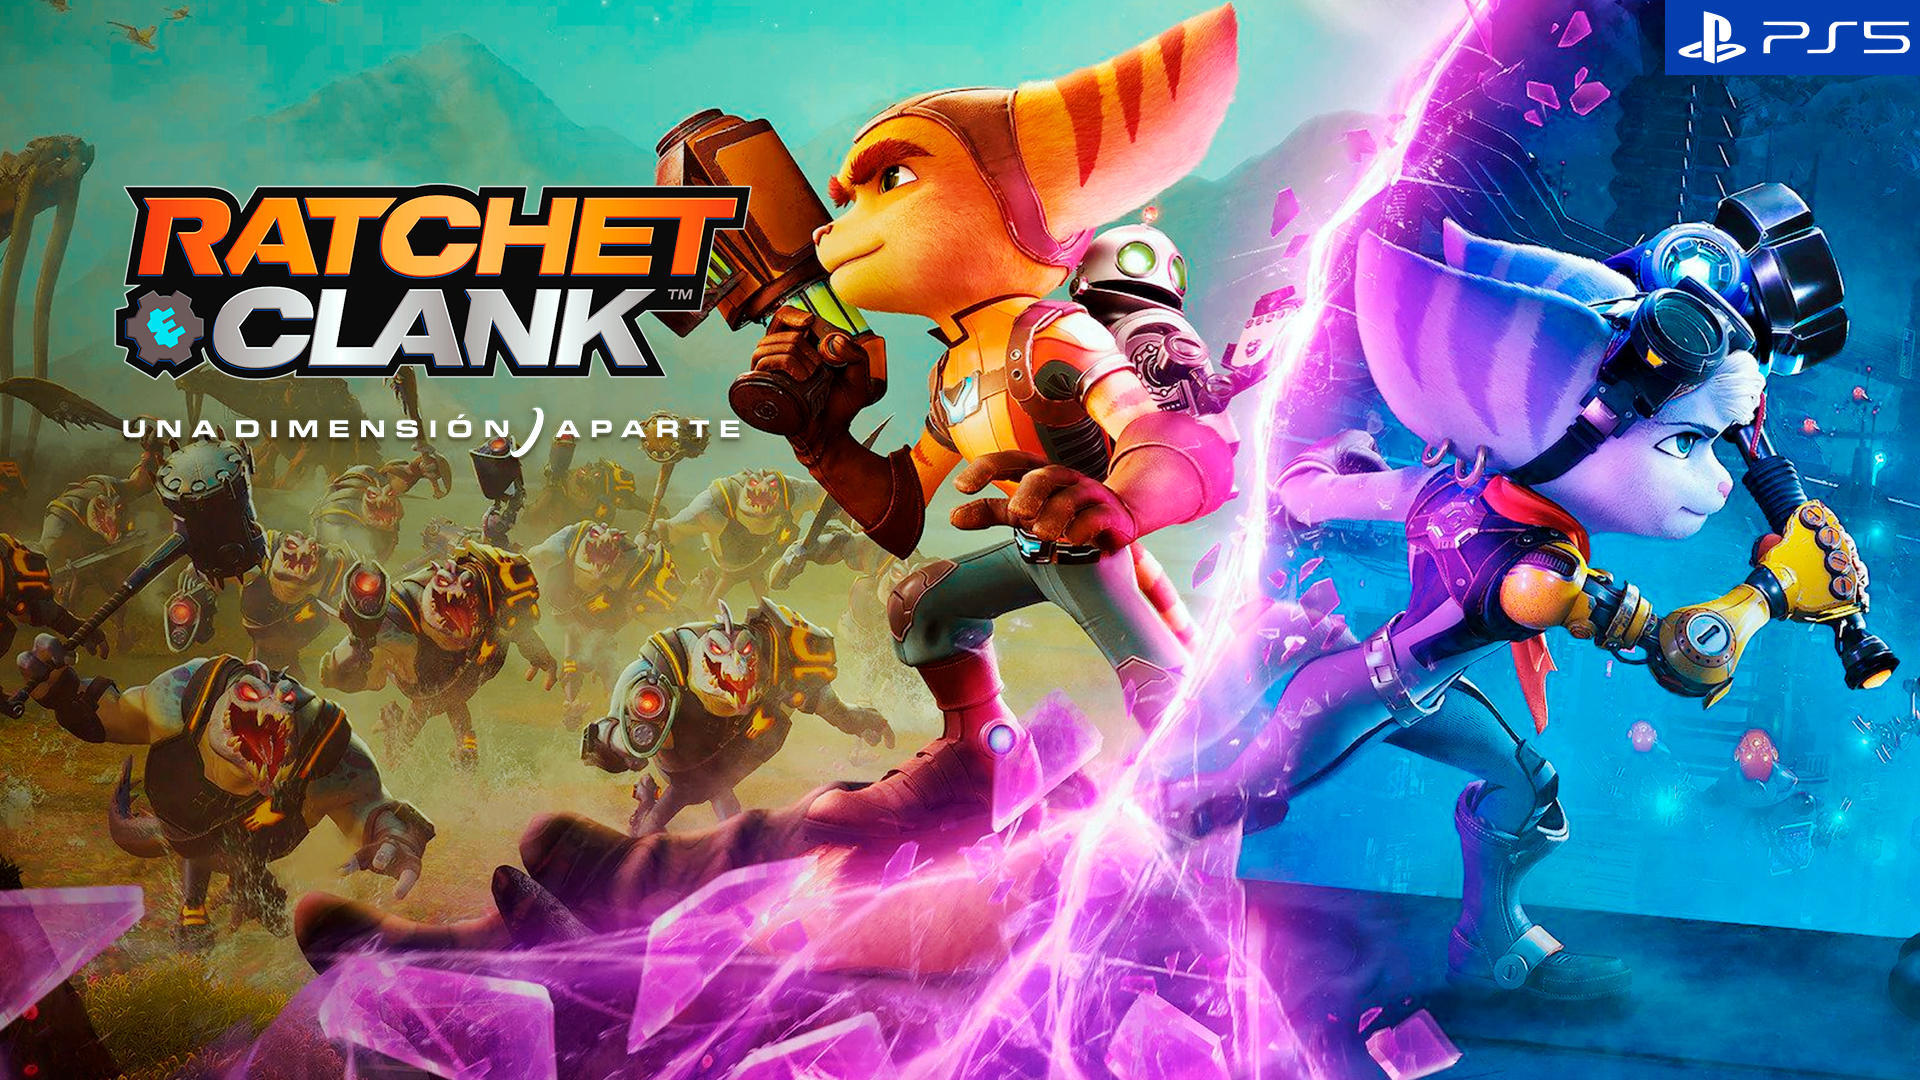 Ratchet & Clank: Una Dimensin Aparte